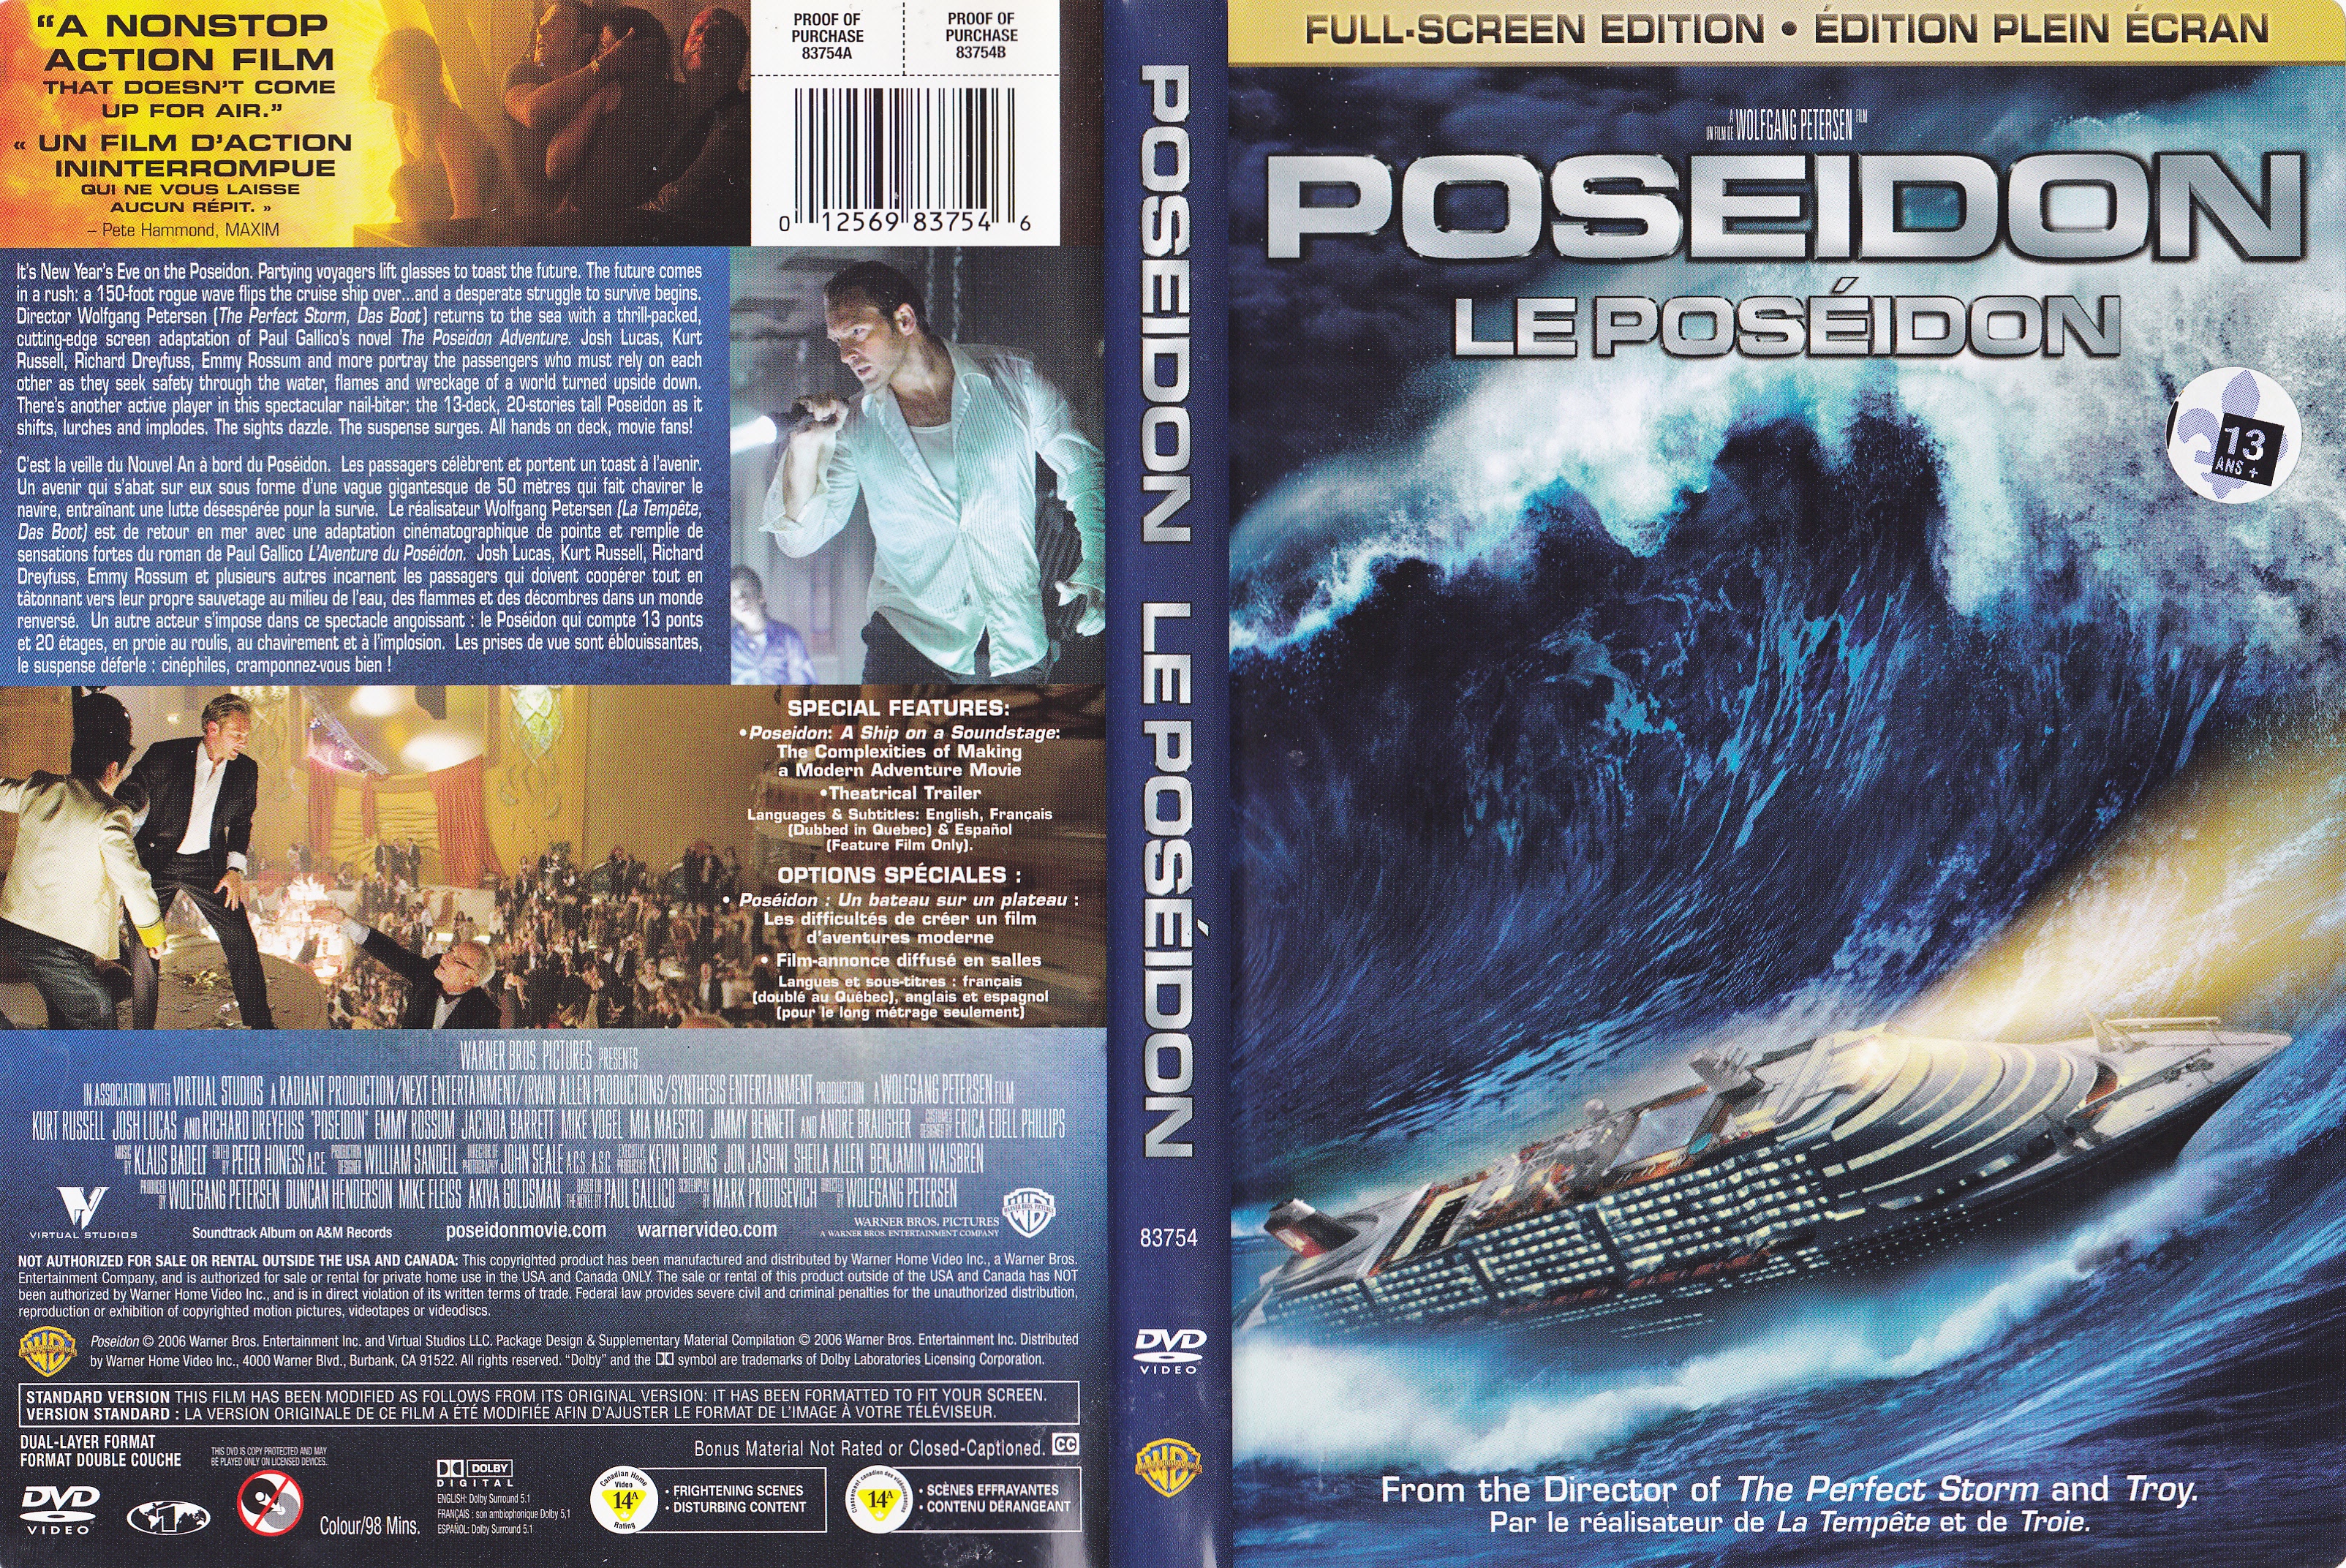 Jaquette DVD Poseidon - Le poseidon (Canadienne)